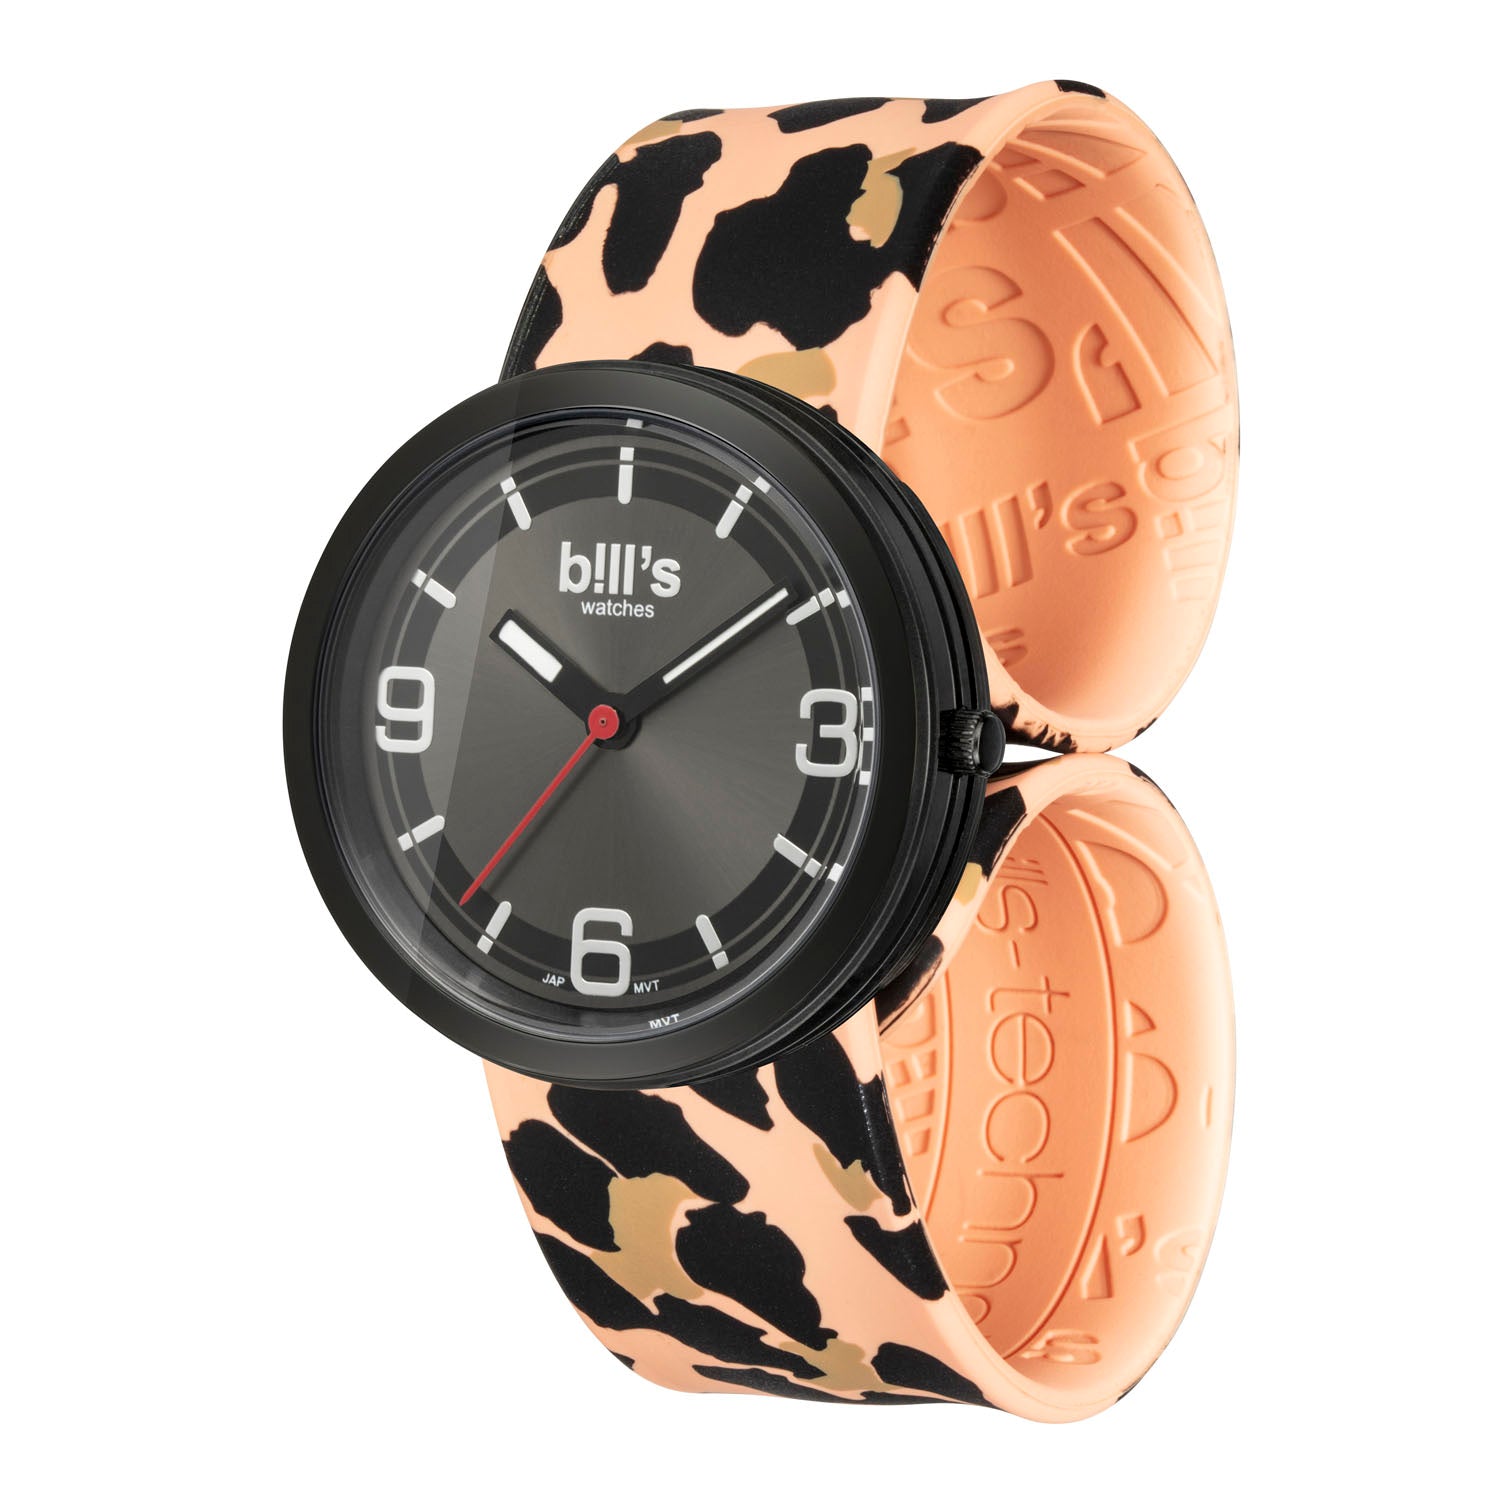 Addict Silicone Watch - Leopard